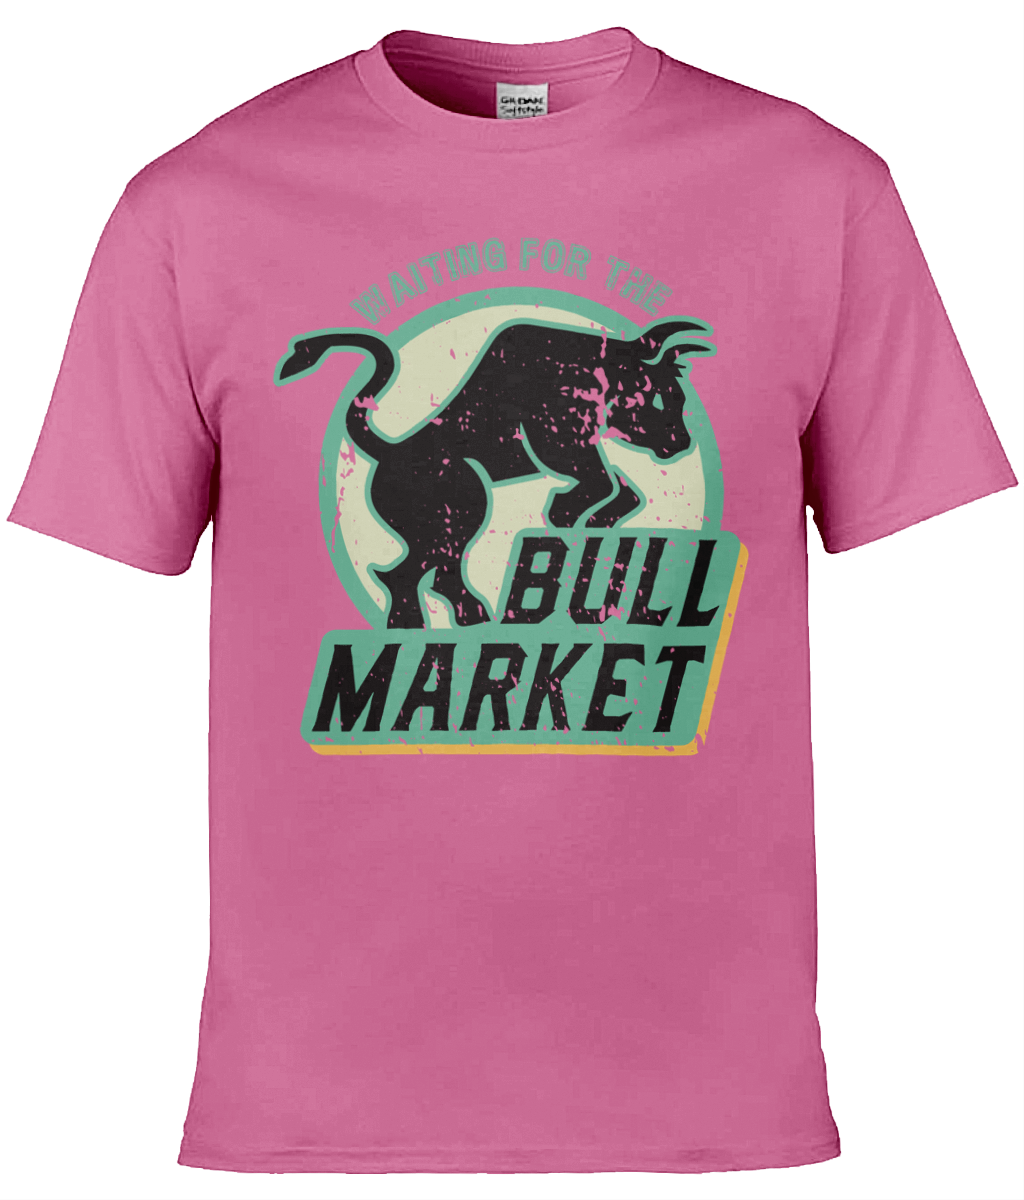 Waiting For the Bull Market T-shirt, Unisex T-shirt